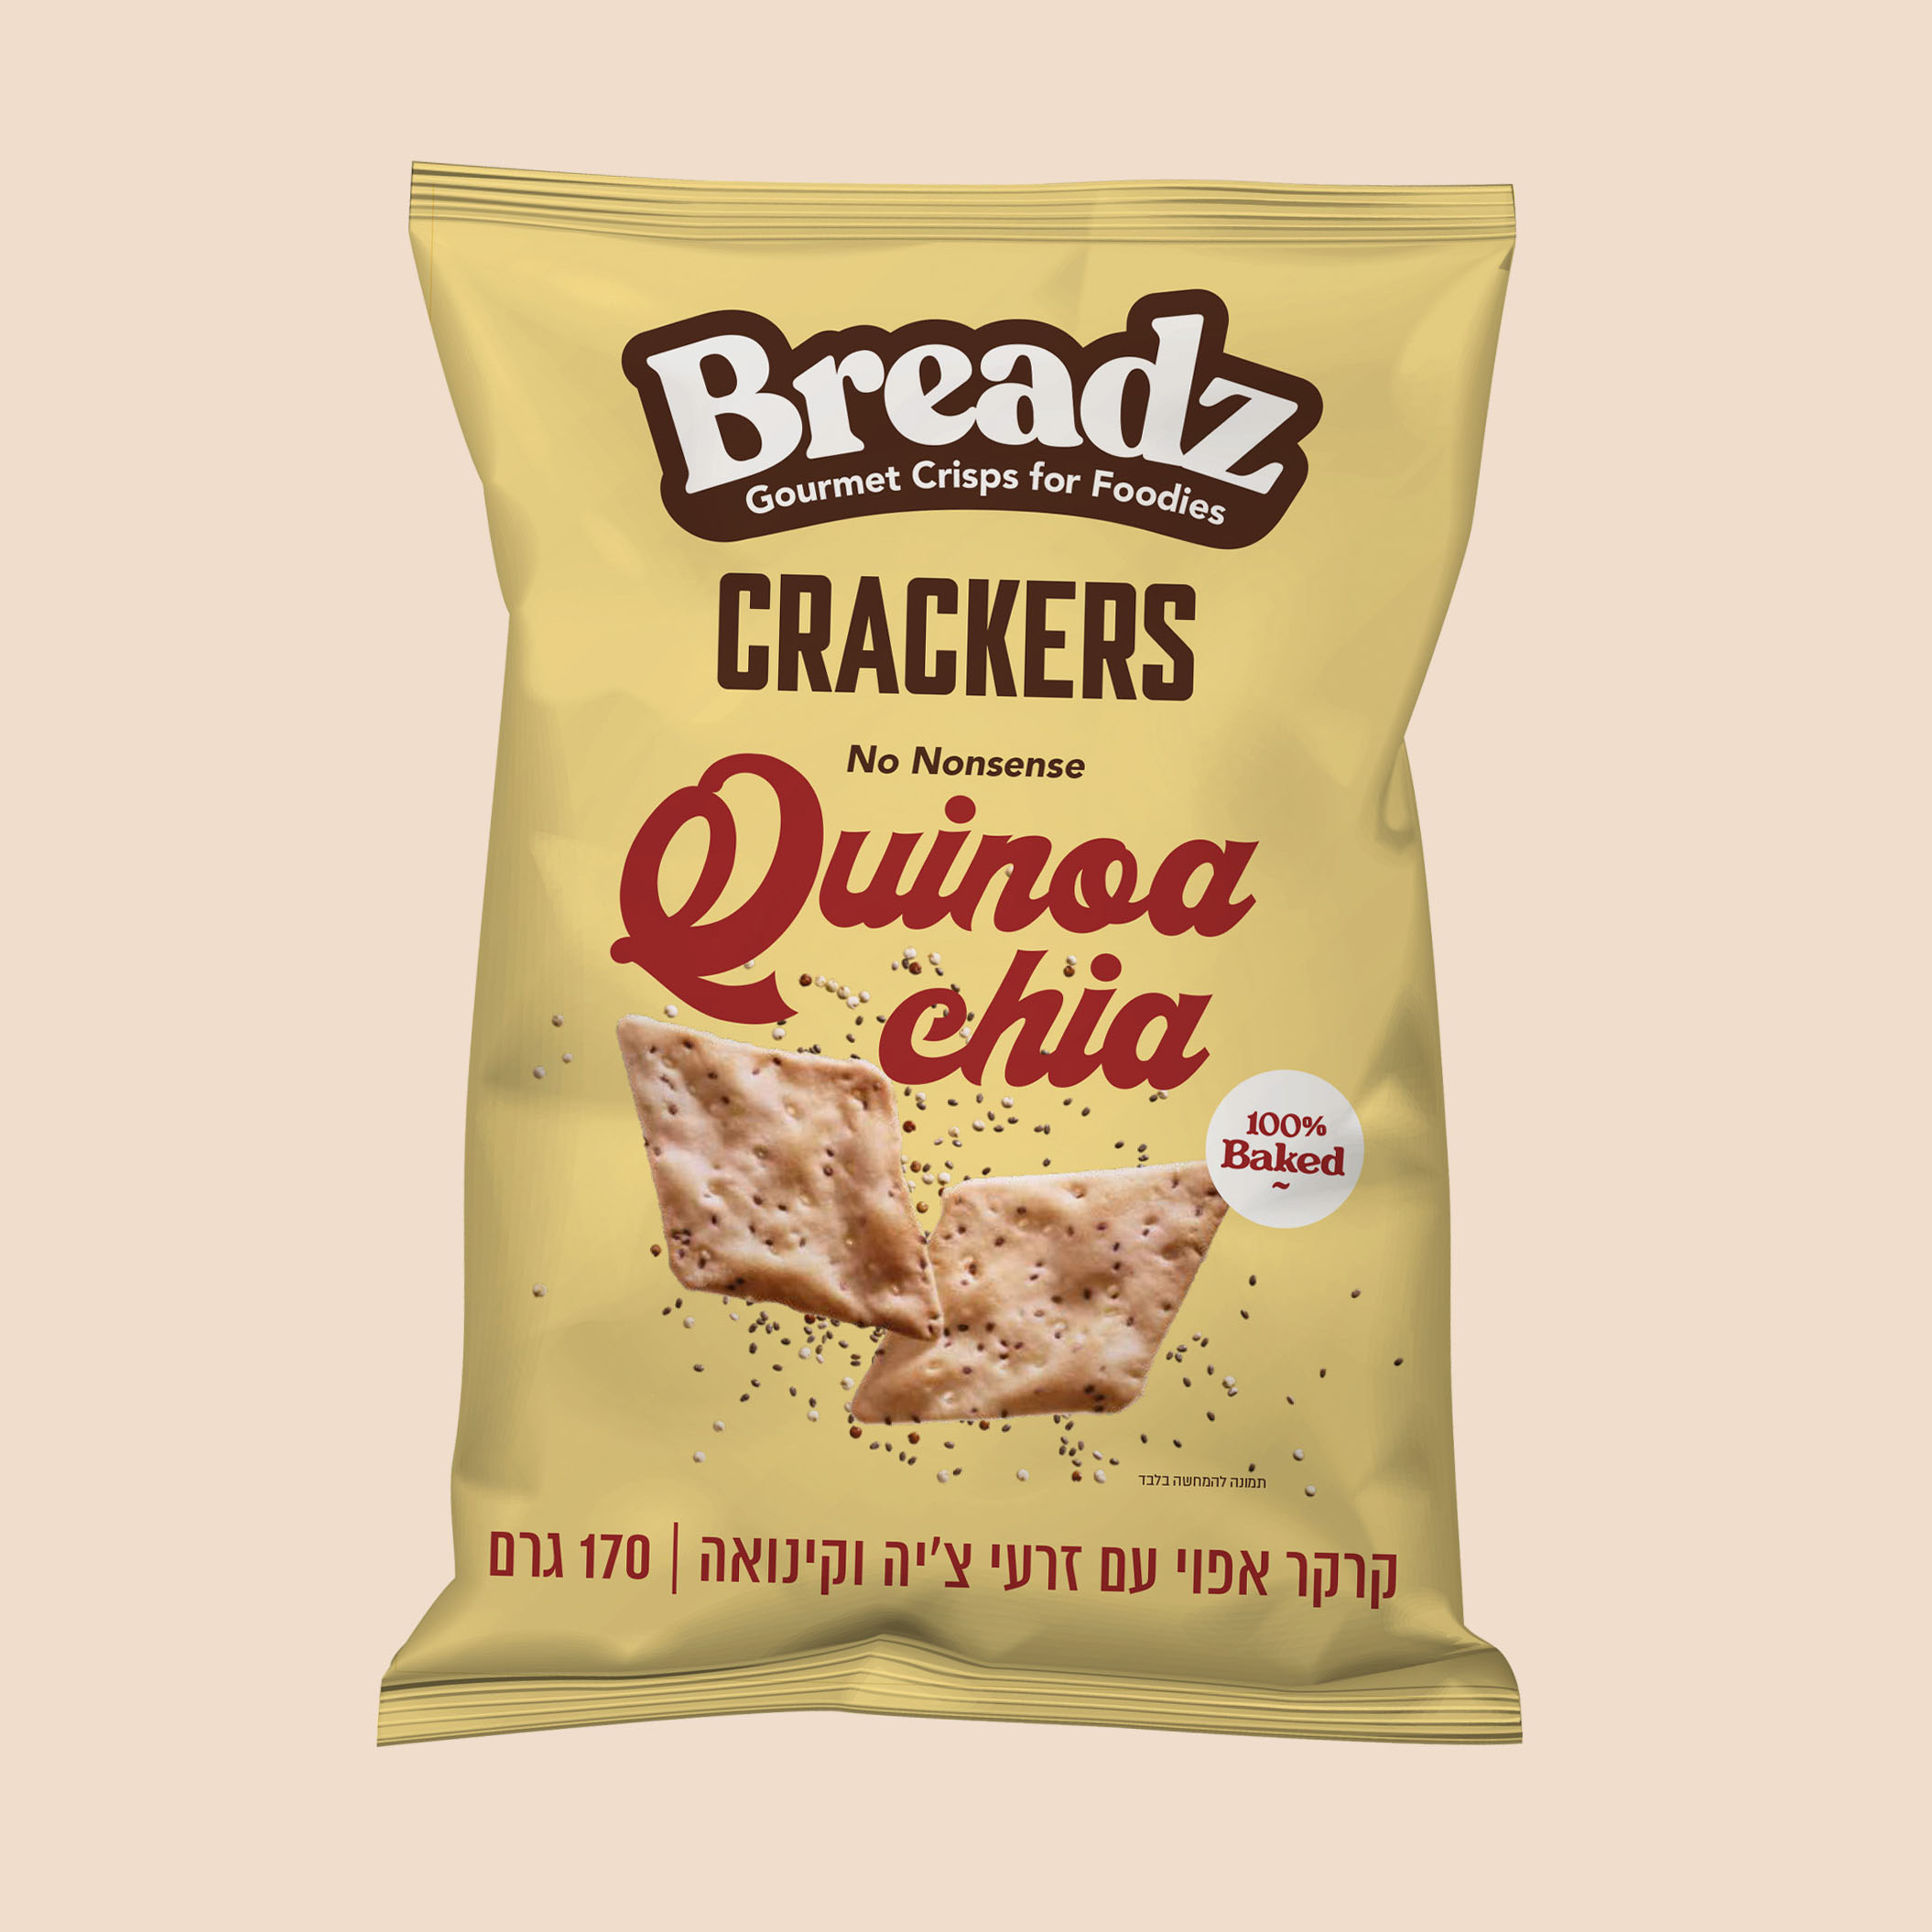 Breadz Gourmet Crisps for Foodies Packaging Design